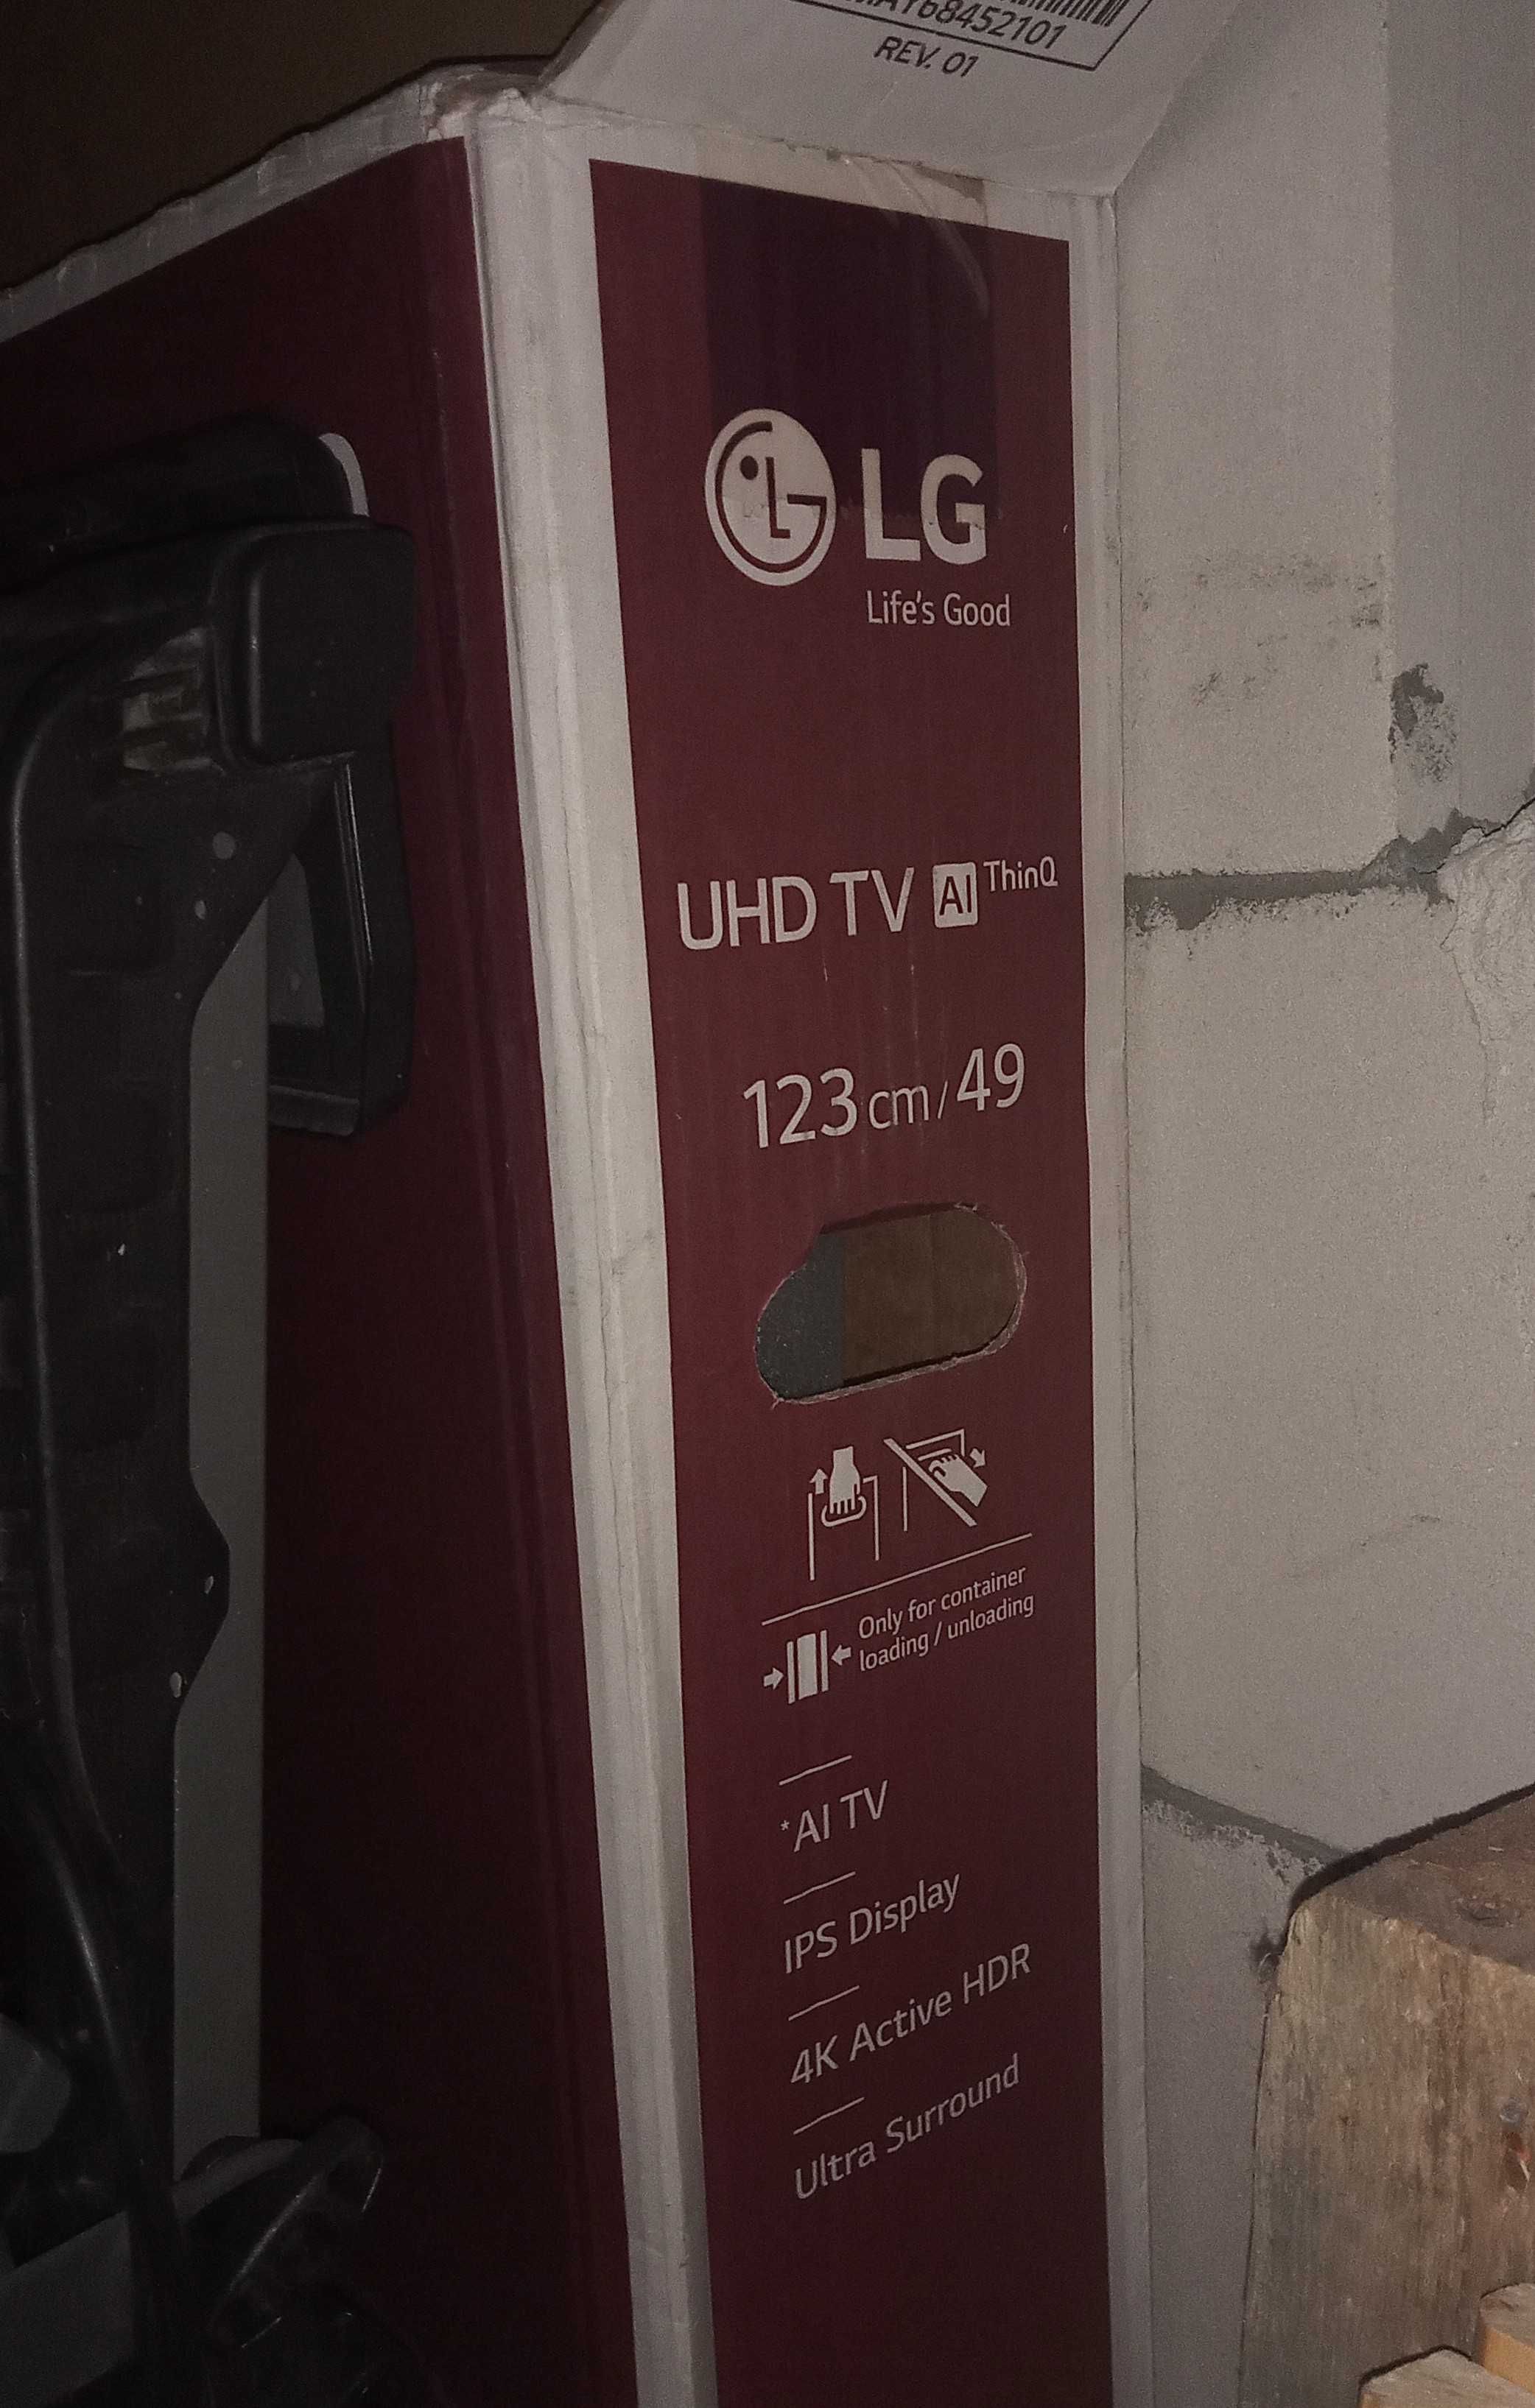 Uszkodzony TV LG uhd 123 cm/49 (matryca)